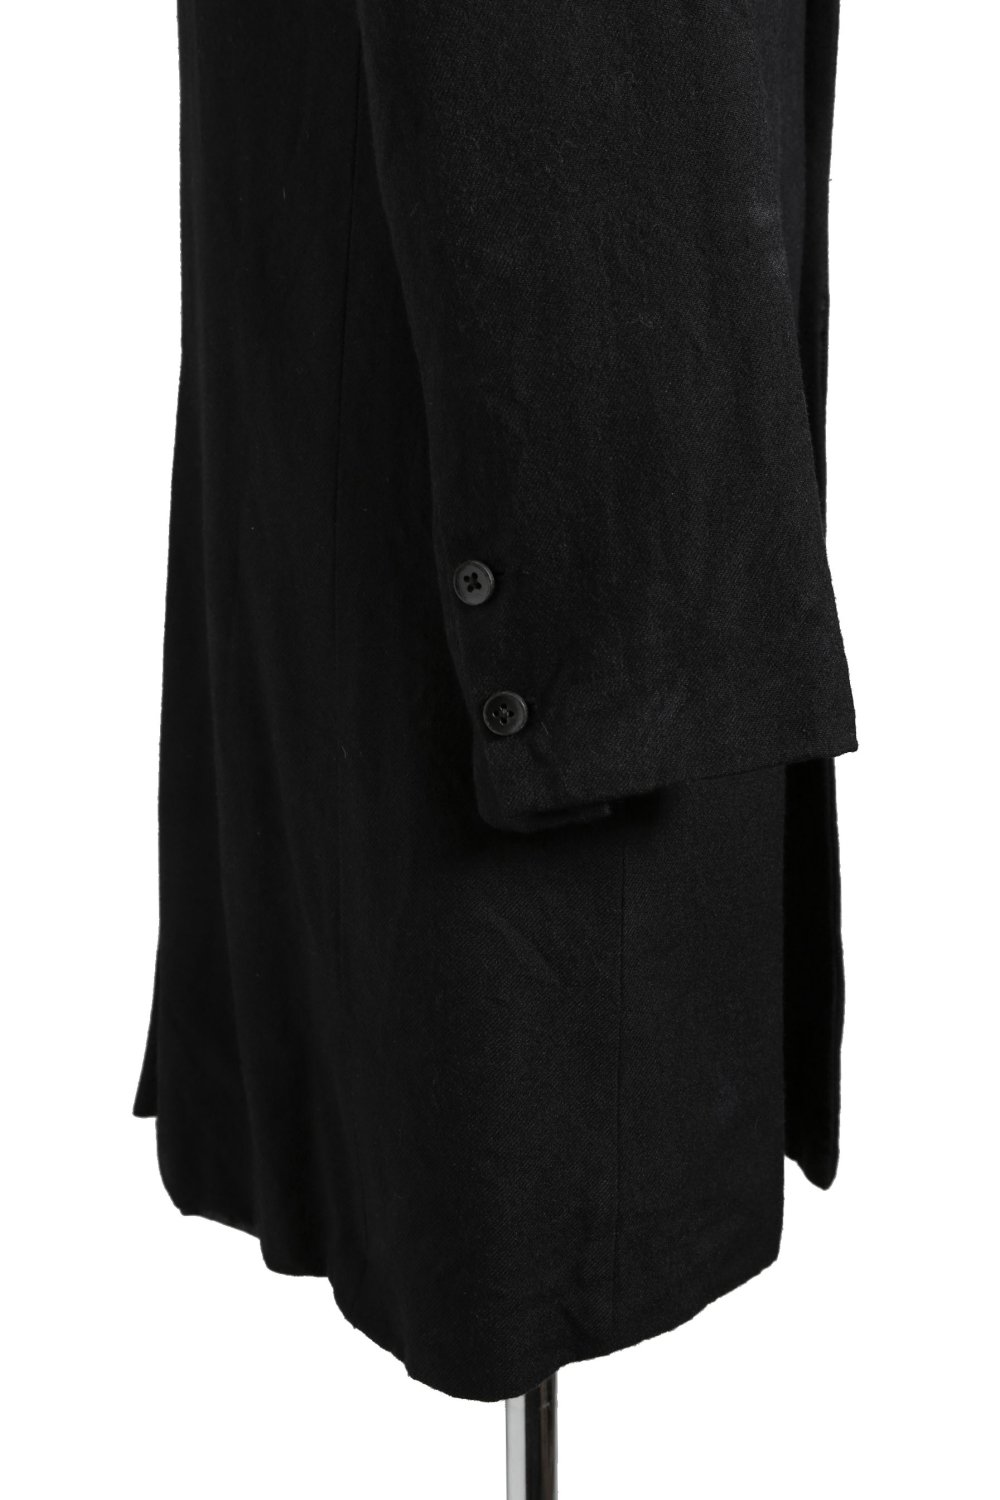 GEOFFREY B.SMALL / 18AW TNC01 / Single-breasted Coat / Wool Tweed 